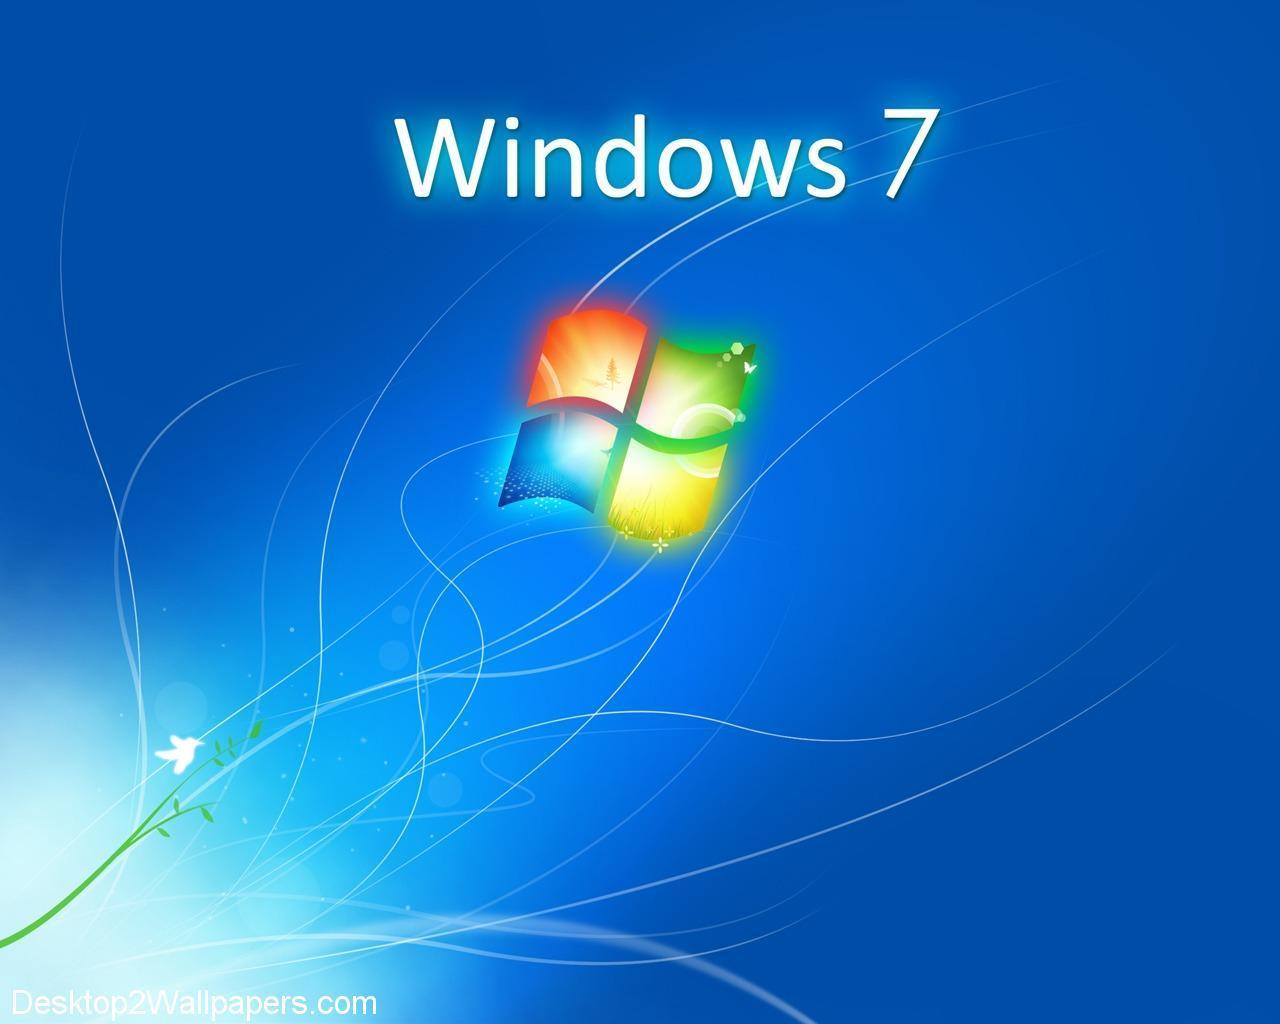 Free Desktop Background for Windows 7 Wallpaper. Best Free Wallpaper